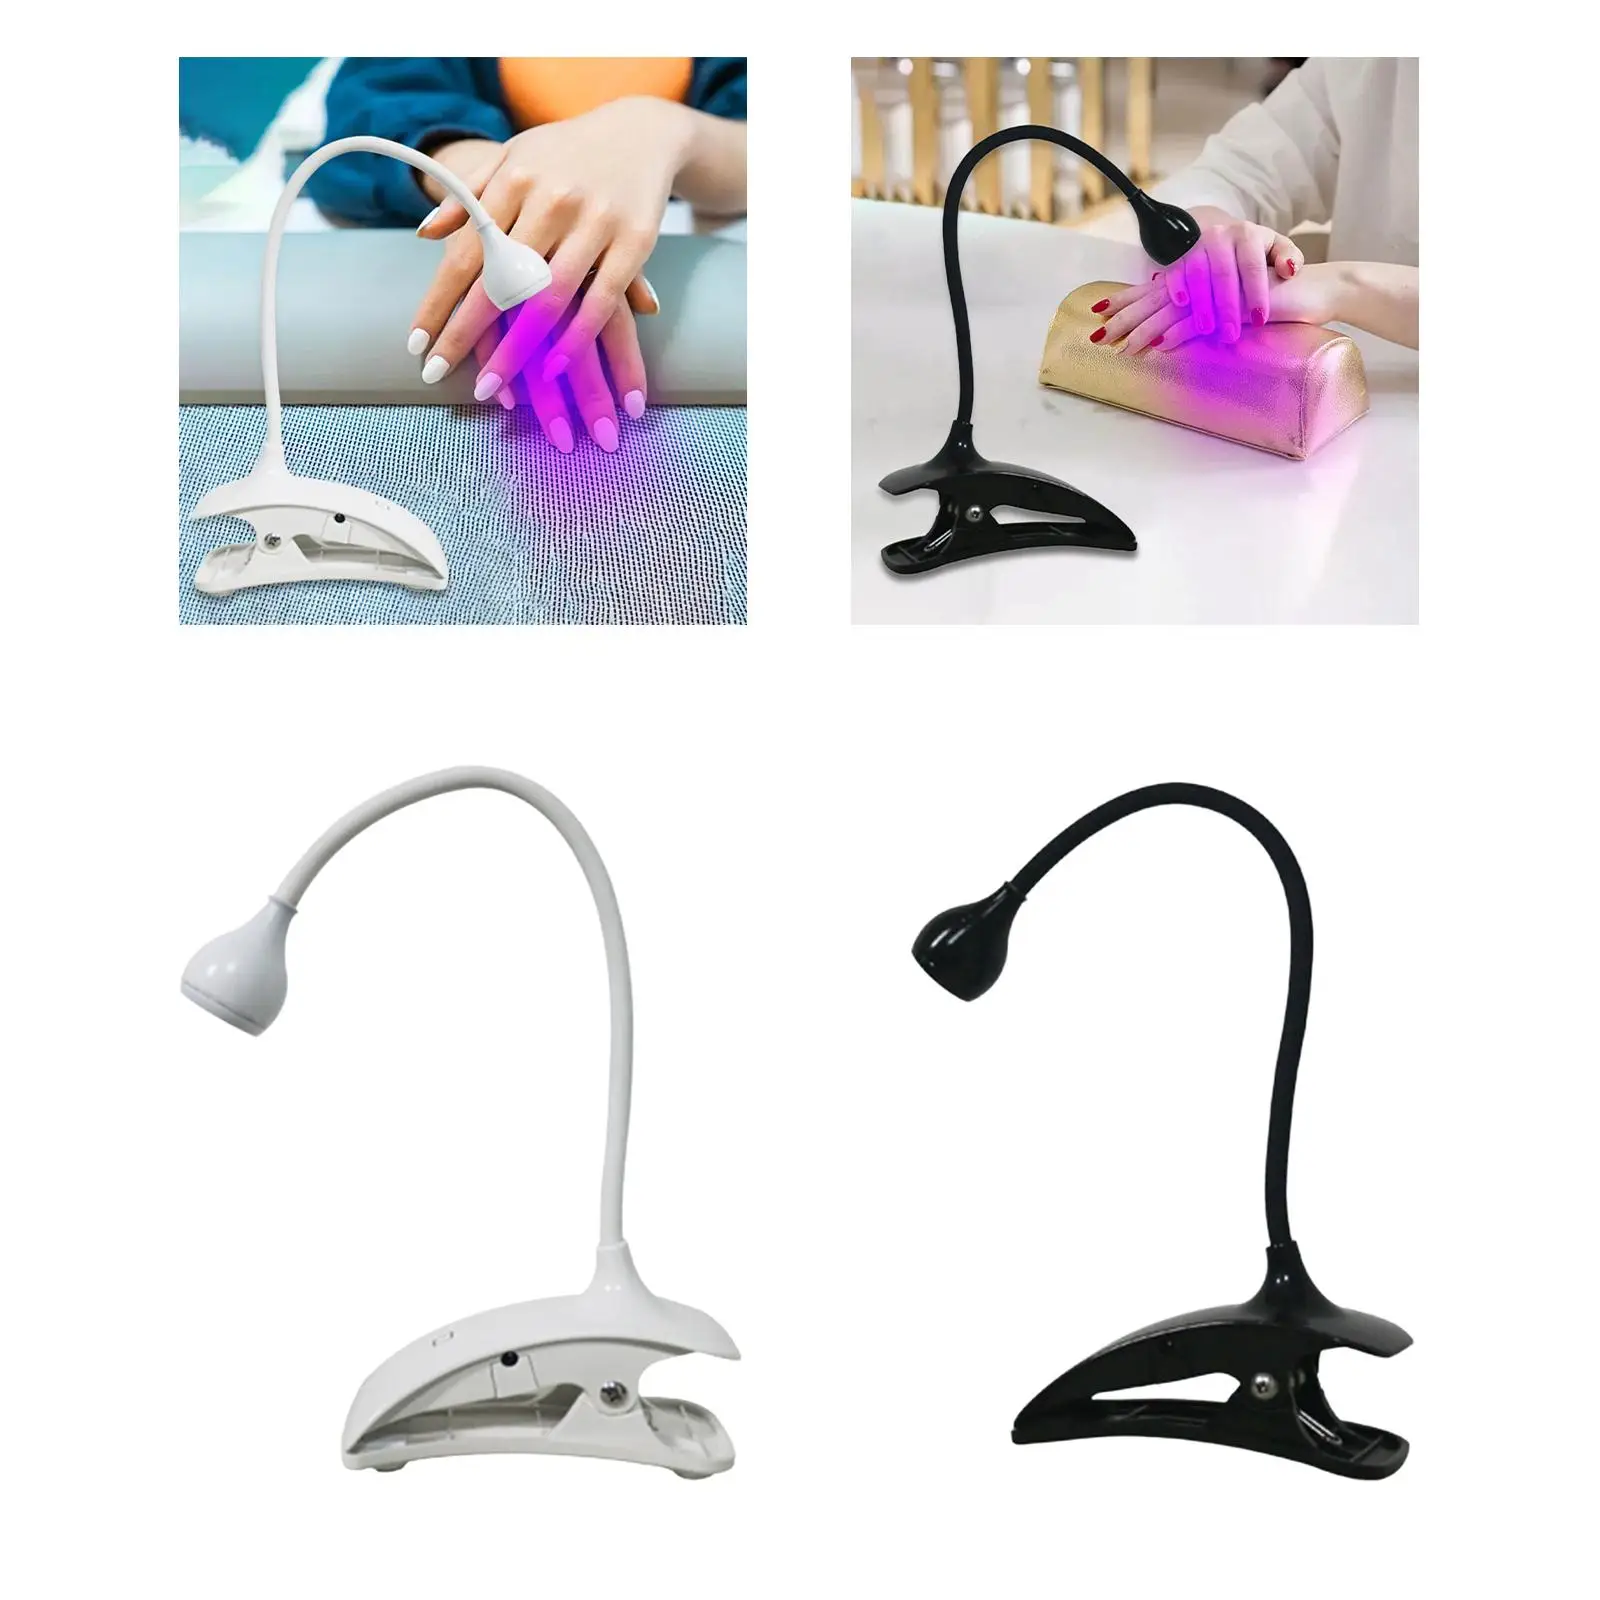 Nail Drying Light Flexible Bendable Nail Dryer Lamp for Starters Beginners